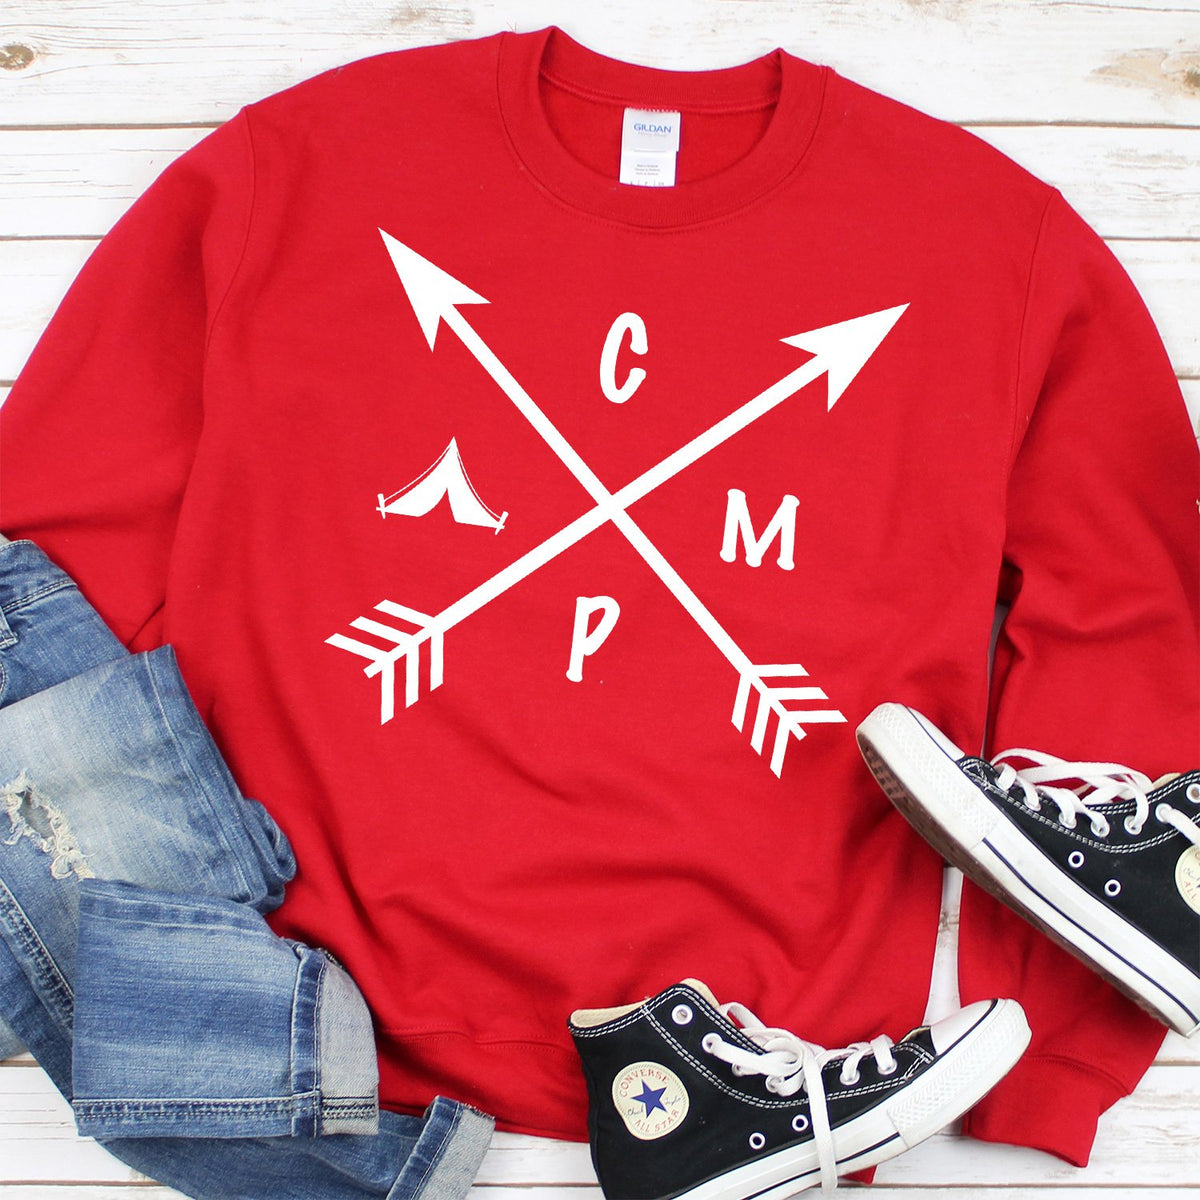 Camp with Arrows - Long Sleeve Heavy Crewneck Sweatshirt